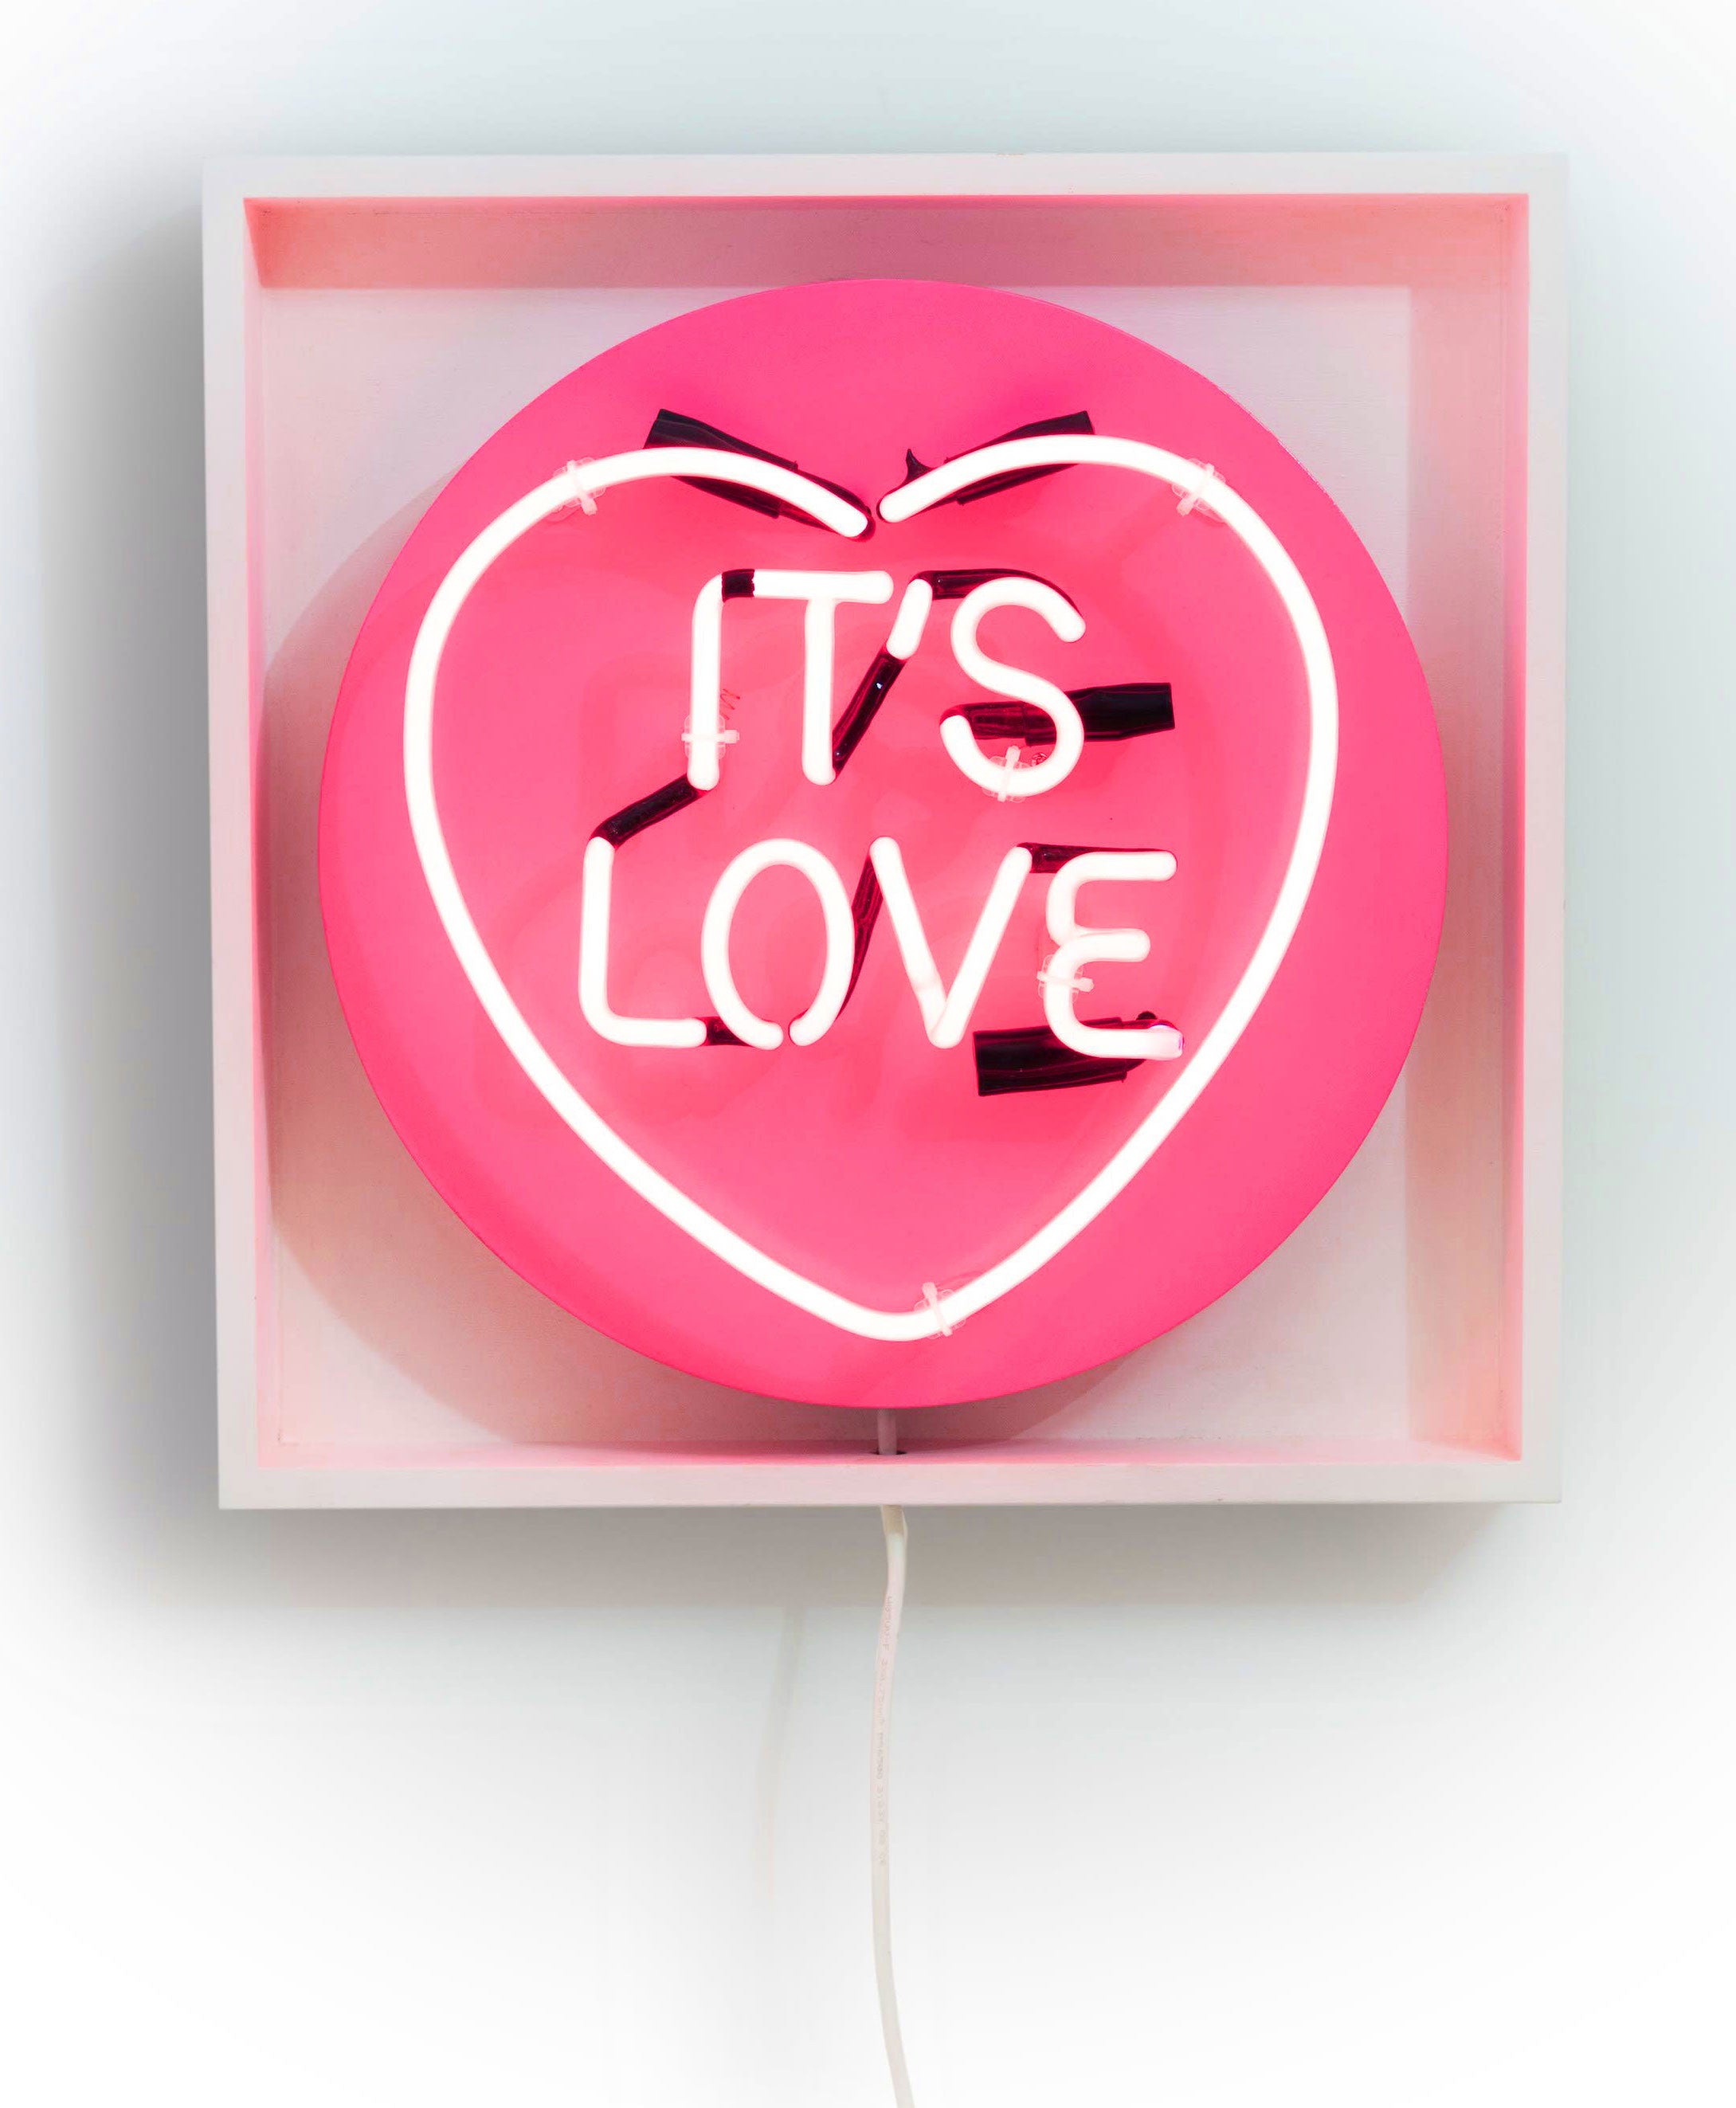 It's Love (neon in frame)